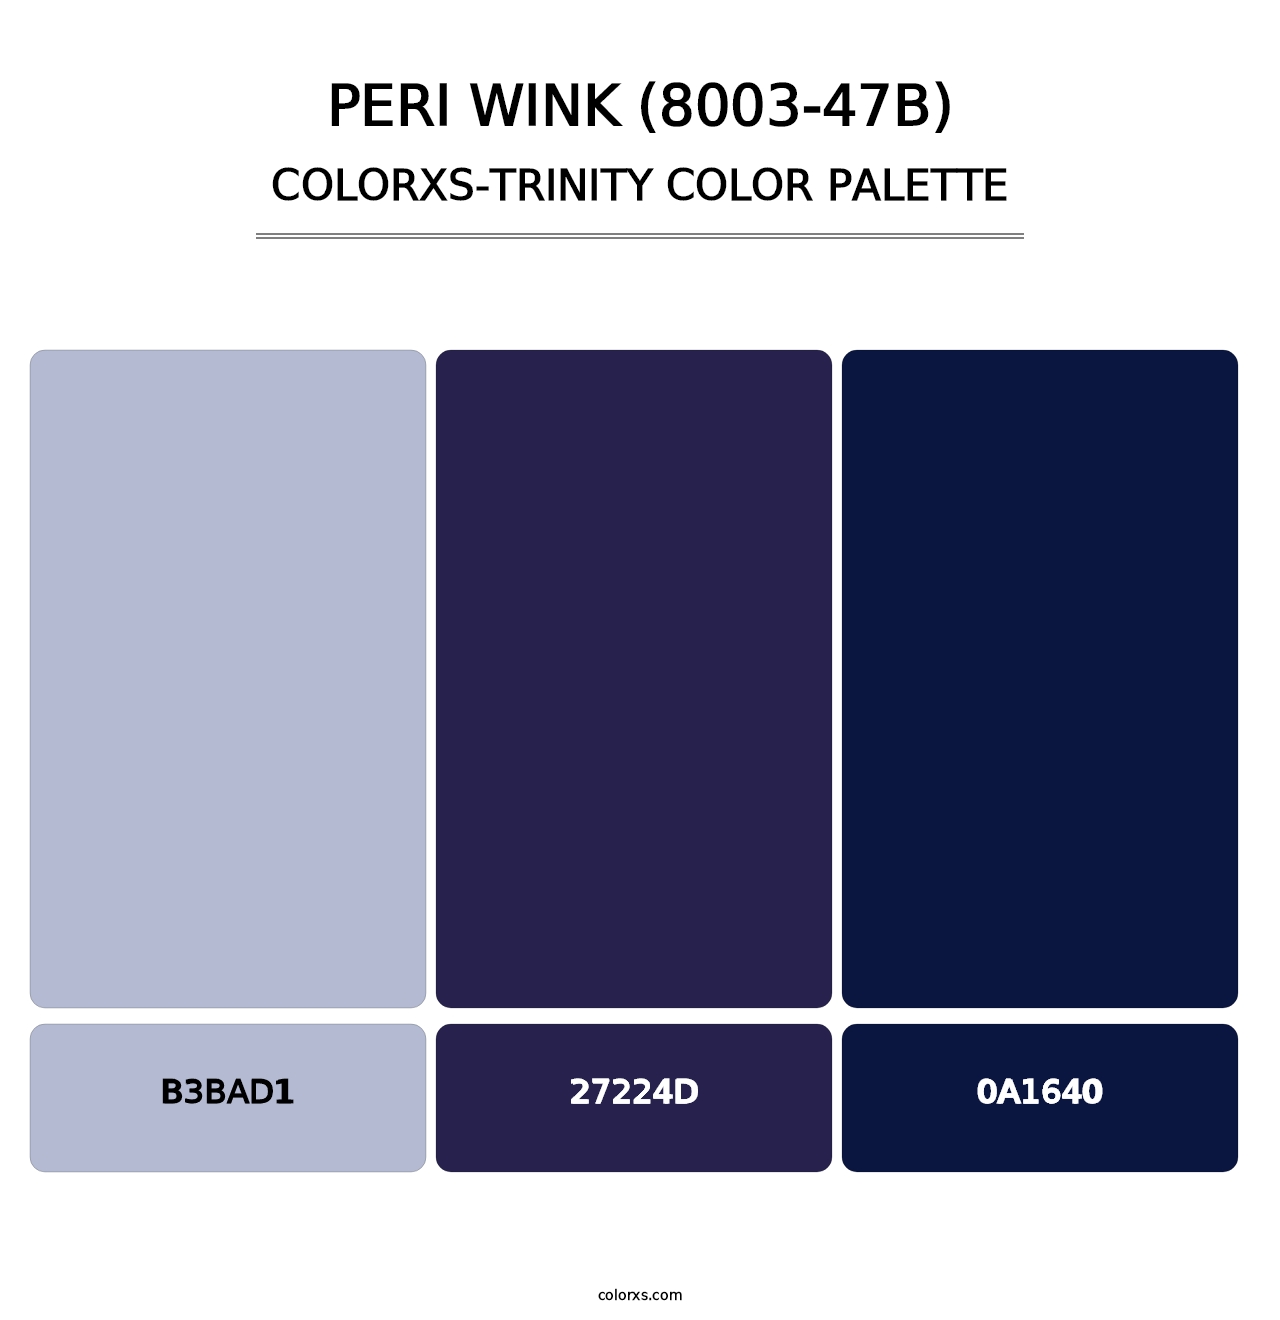 Peri Wink (8003-47B) - Colorxs Trinity Palette